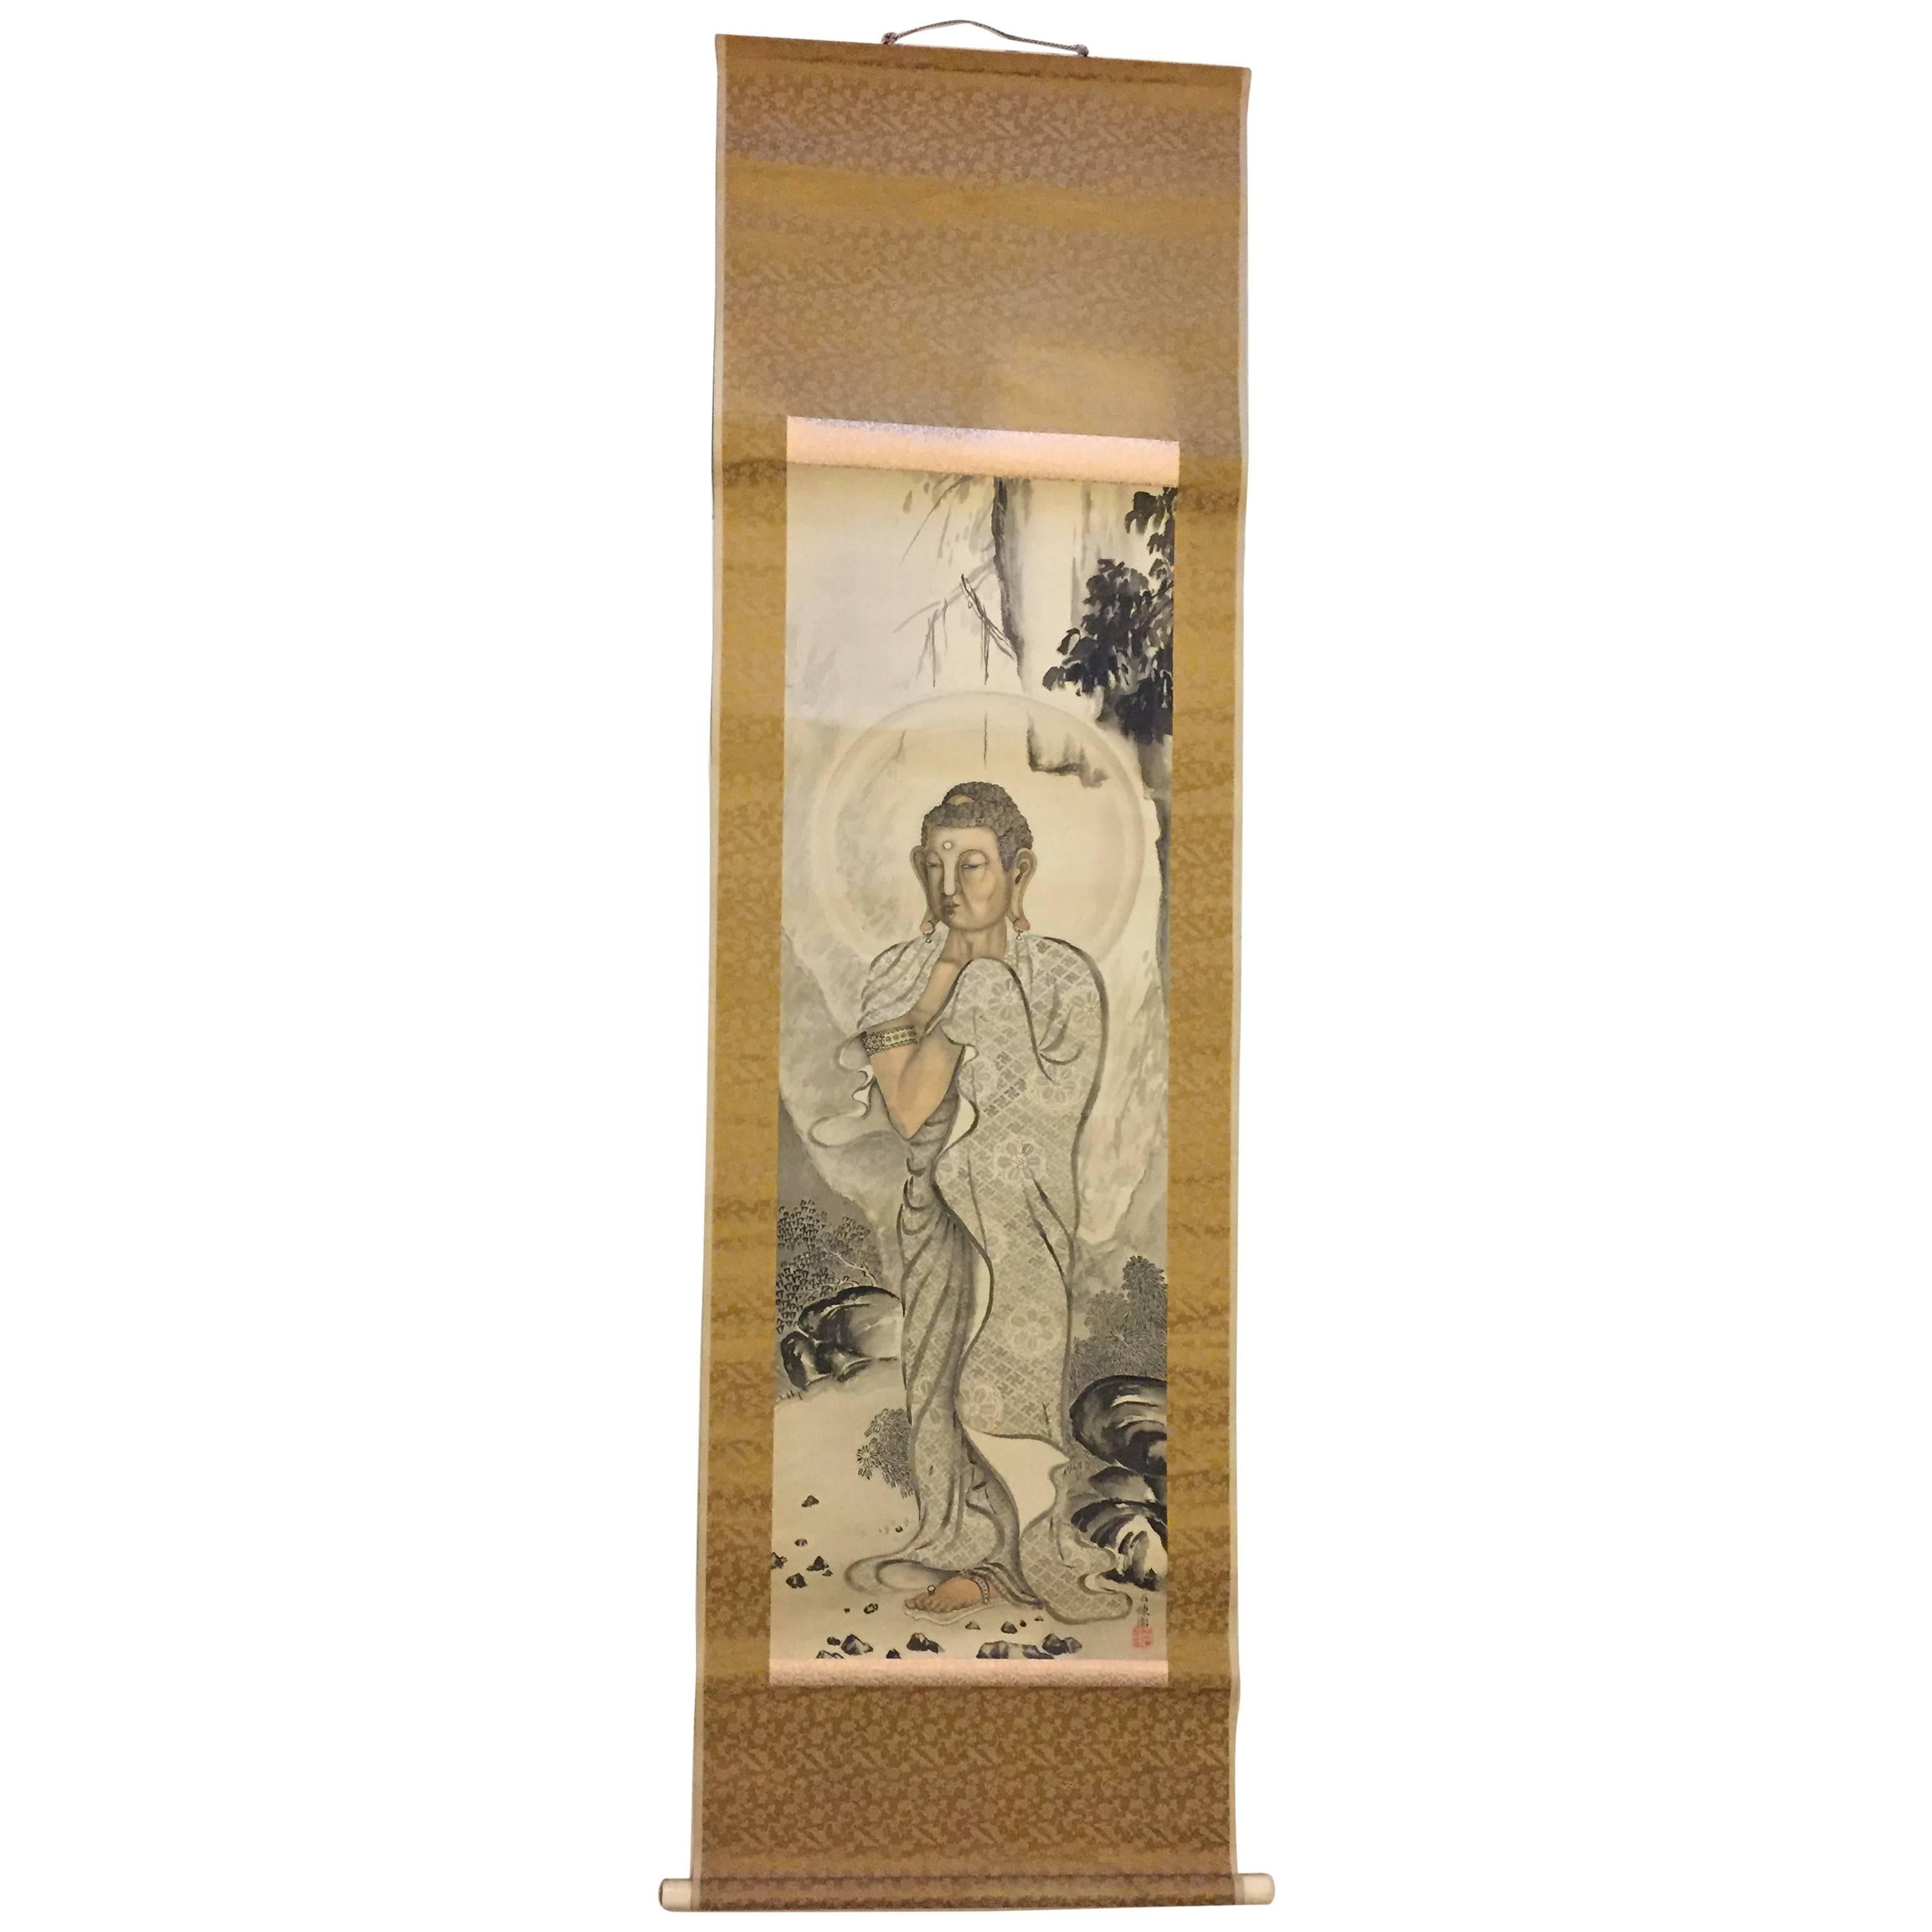 Japan Elegant Gautama Buddha, Hand-Painted Scroll on Silk